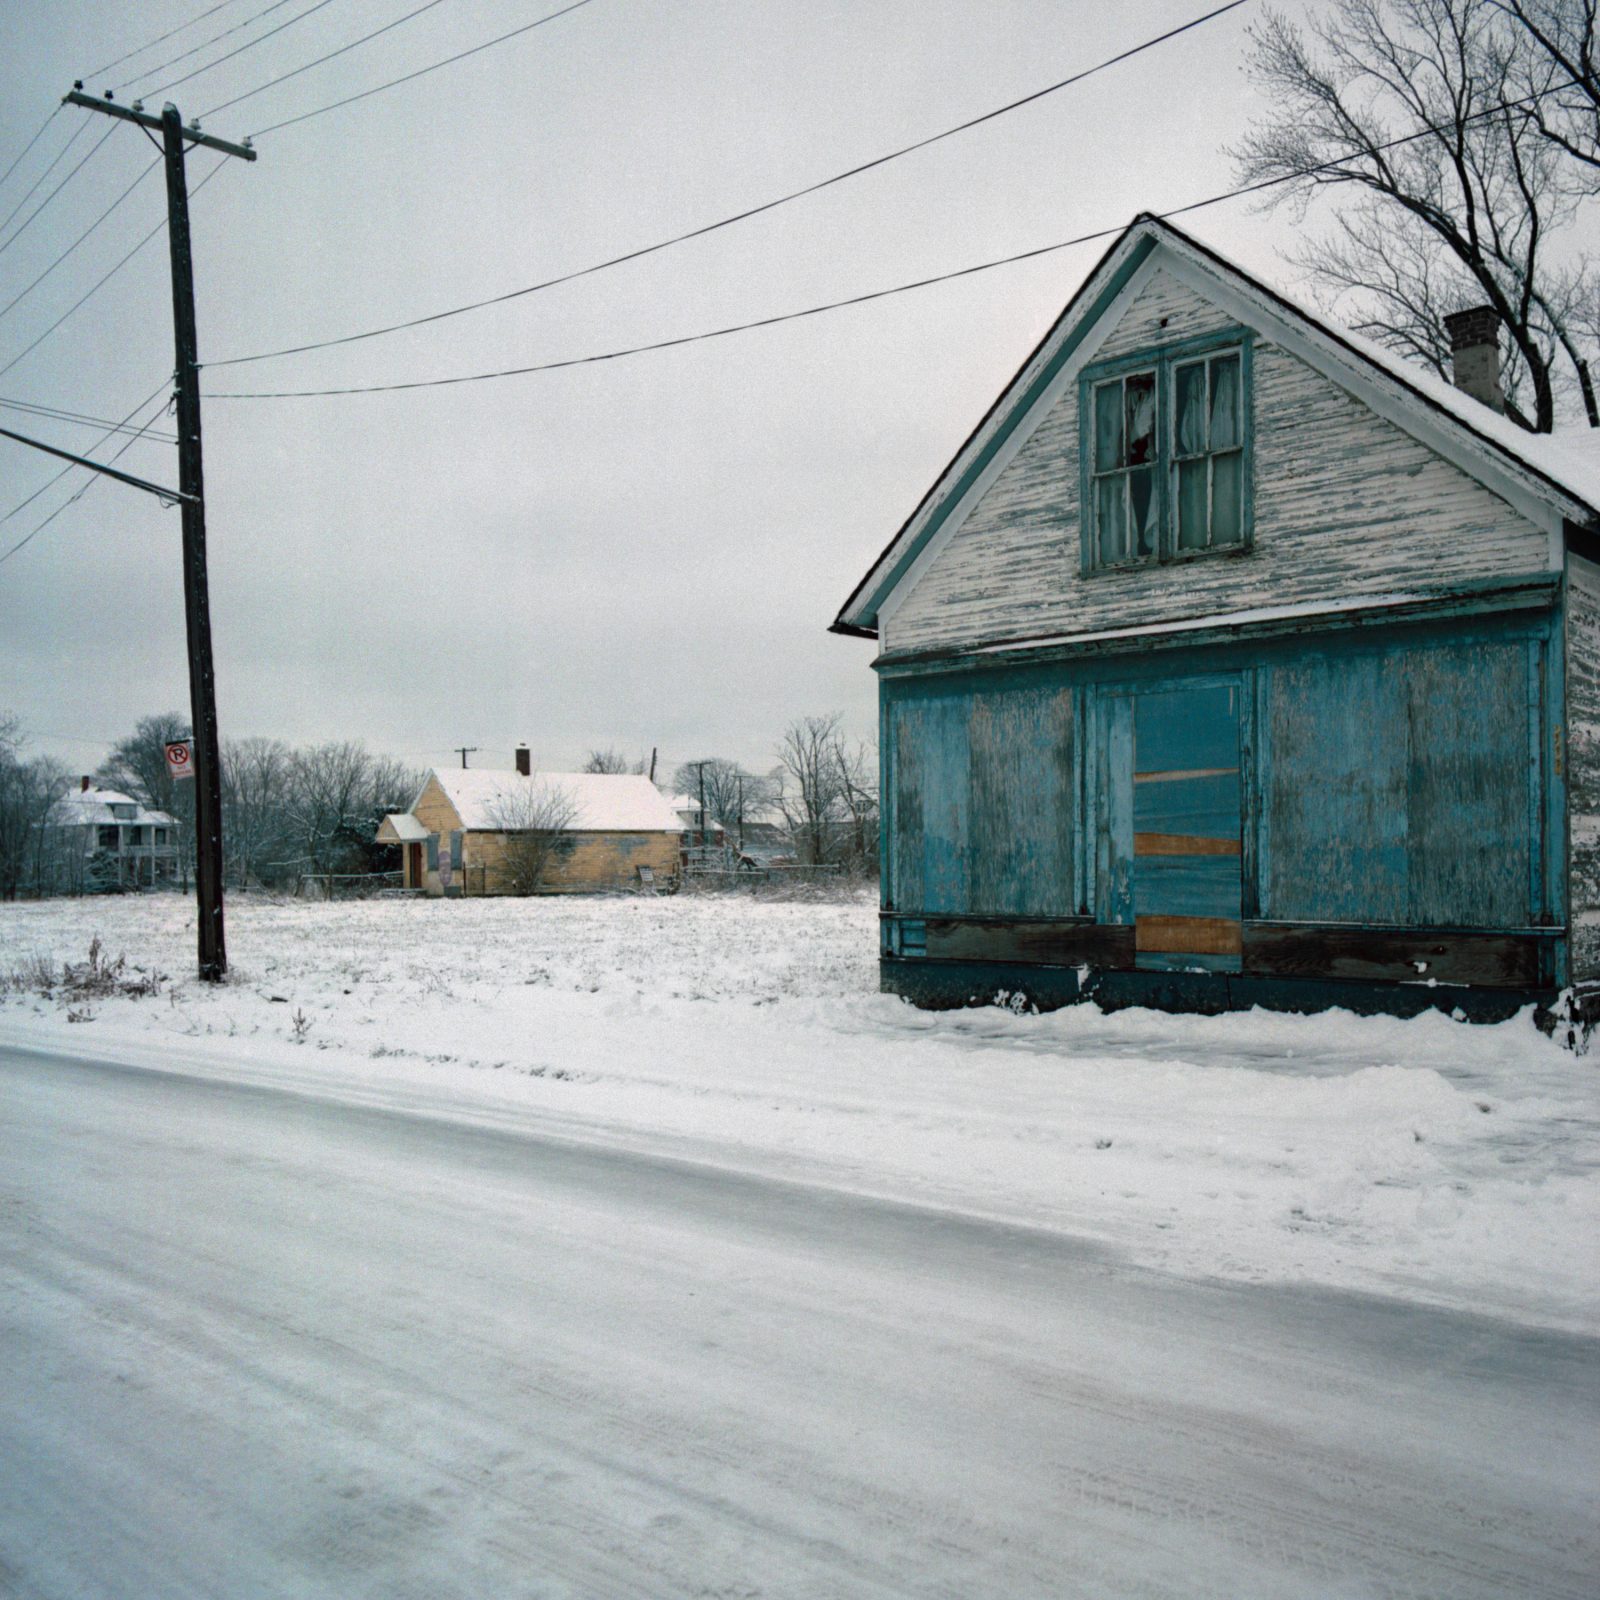 Abandoned house and neighborhood on Detroit's East Side